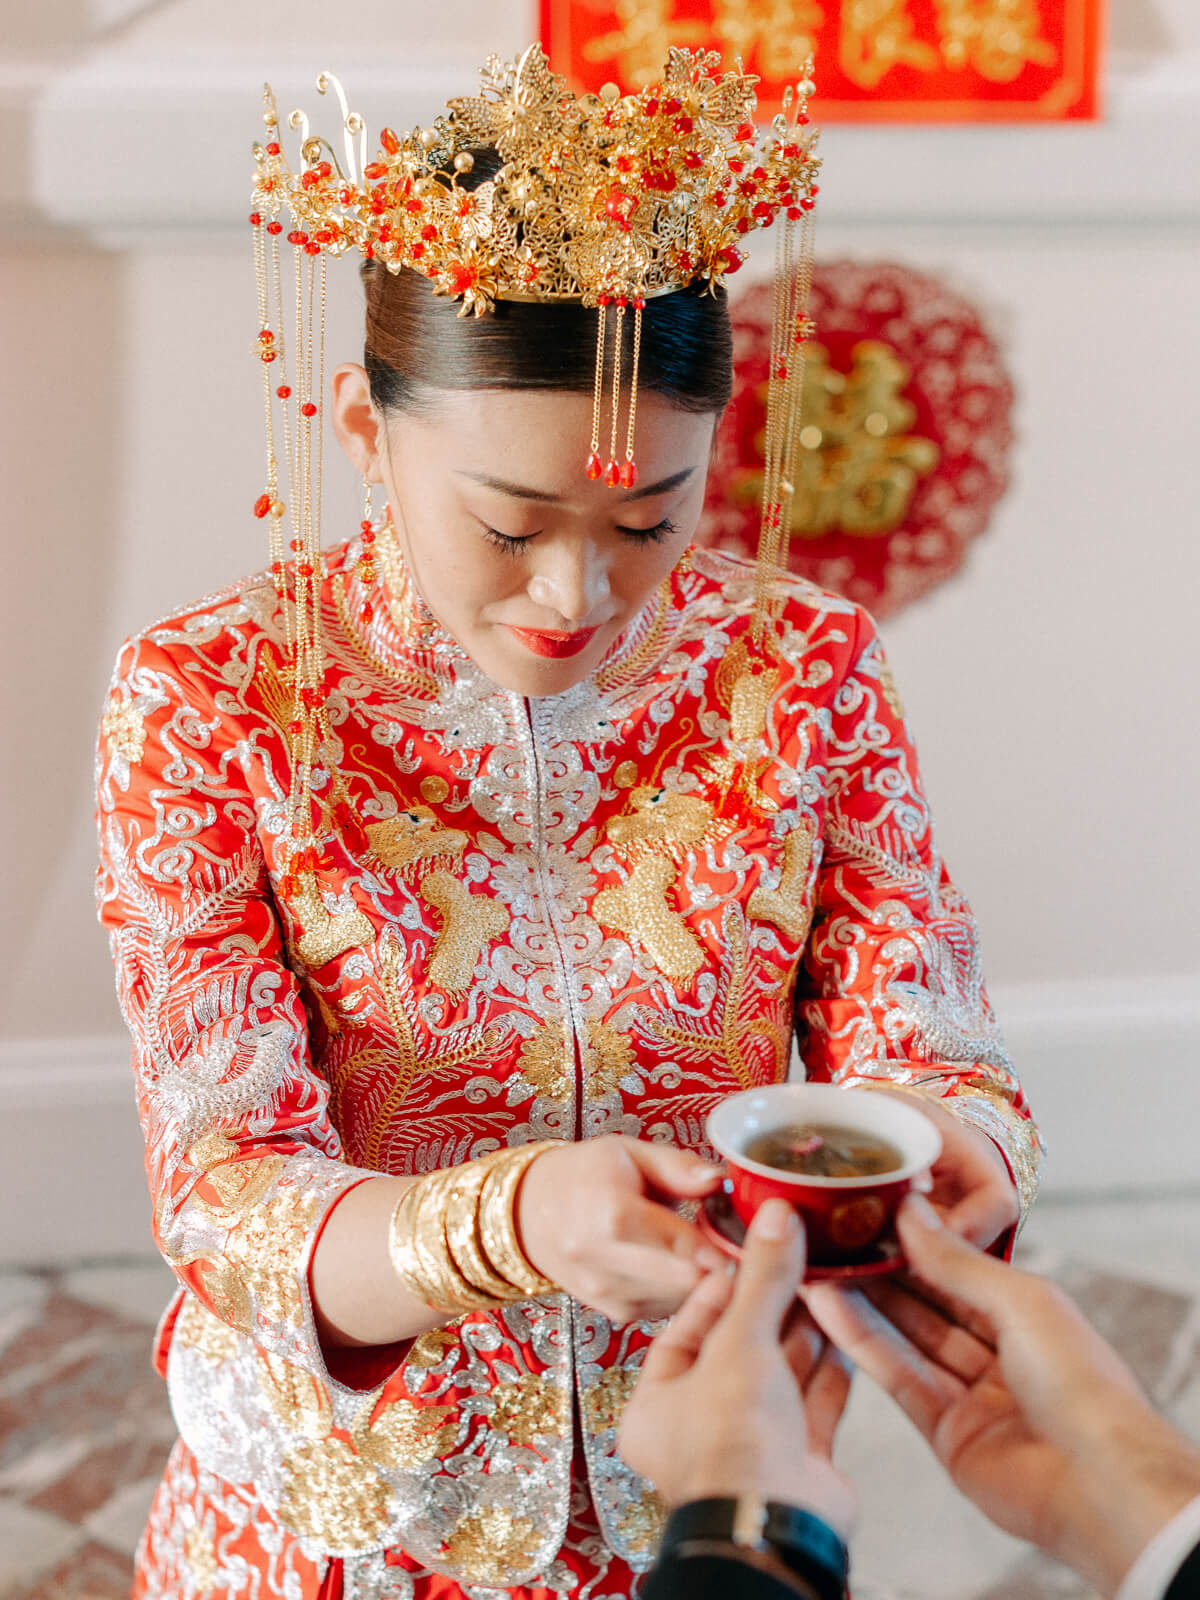 Traditional Chinese Wedding Dress, Qun Kwa, Tea Ceremony, Golden